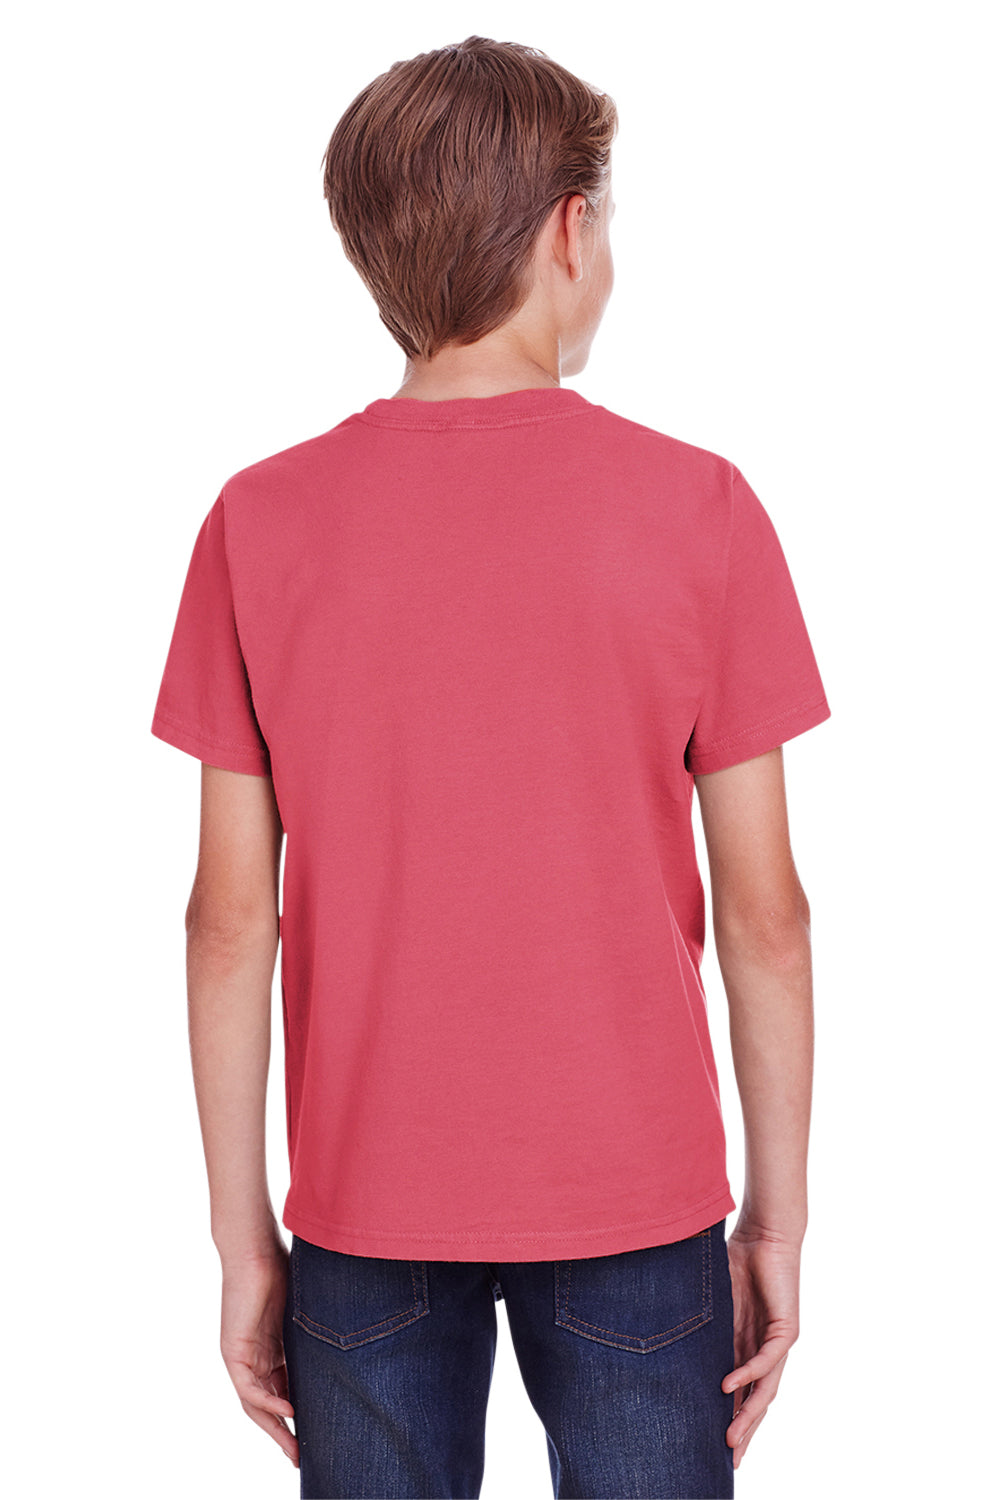 ComfortWash by Hanes GDH175 Youth Short Sleeve Crewneck T-Shirt Crimson Red Back